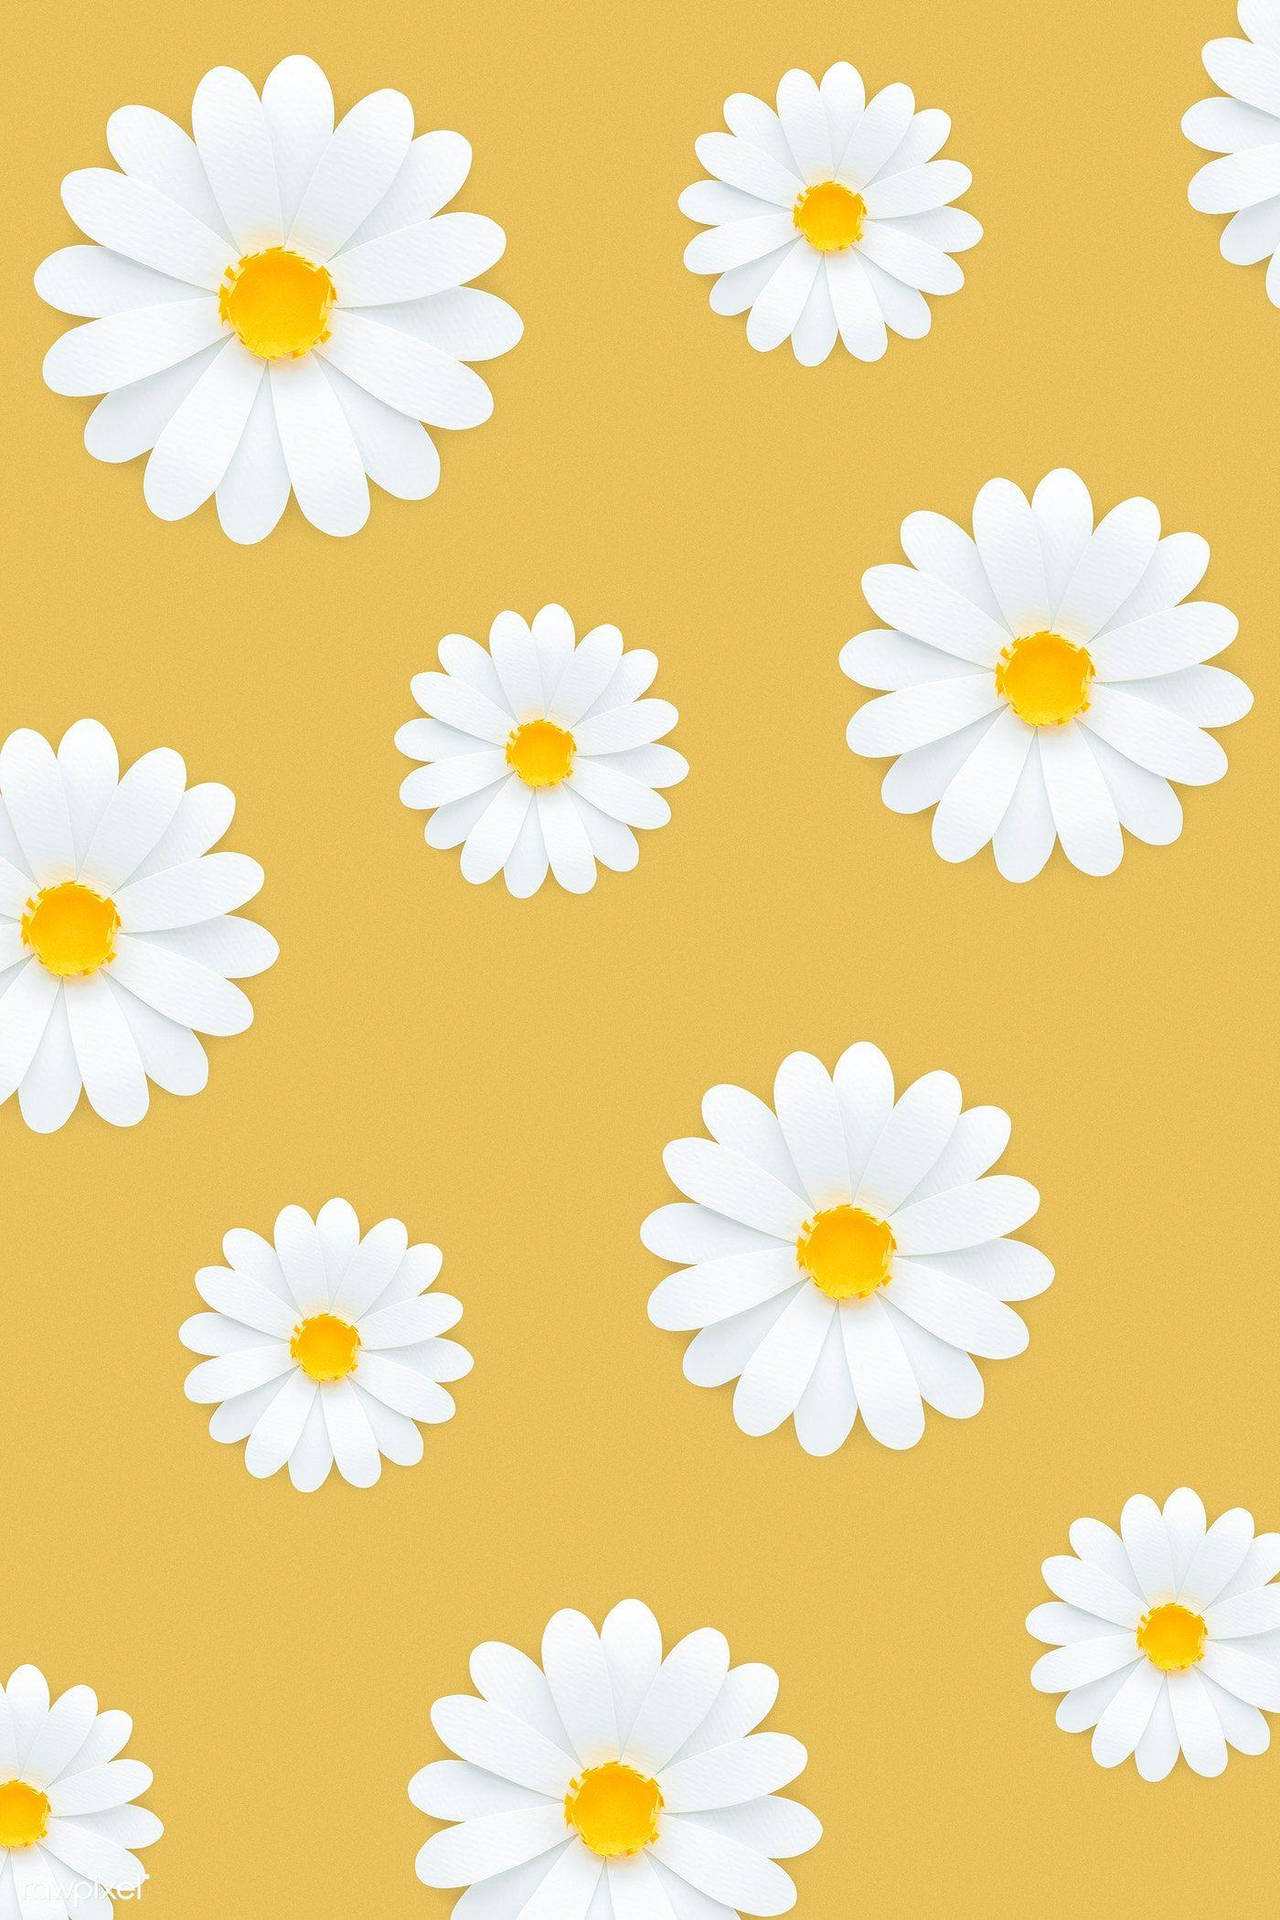 White Daisy Aesthetic In Yellow Wallpaper